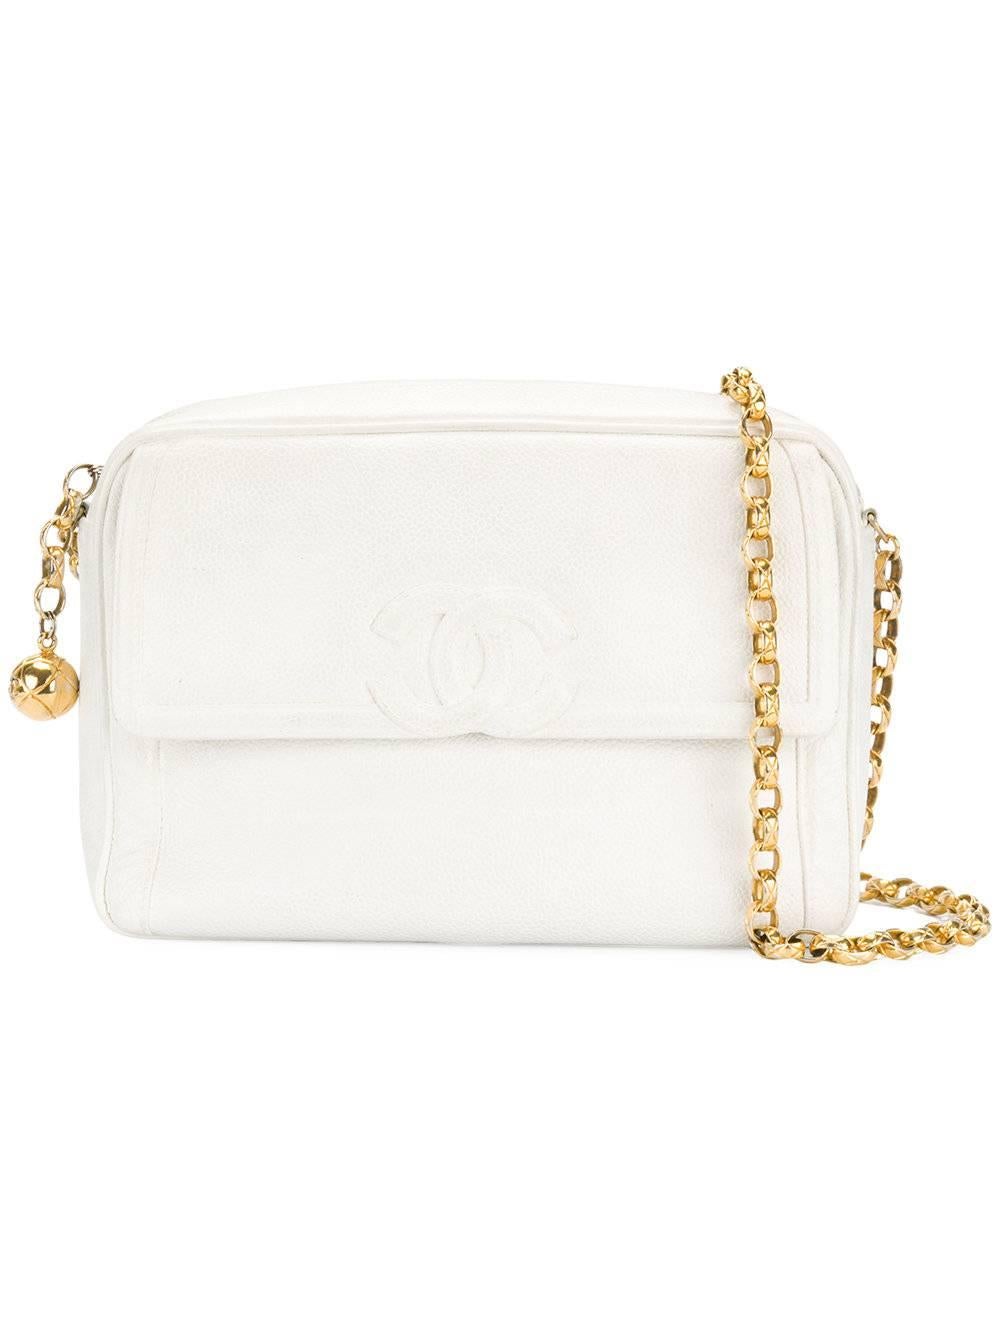 Women's Chanel White Caviar Camera Bag 